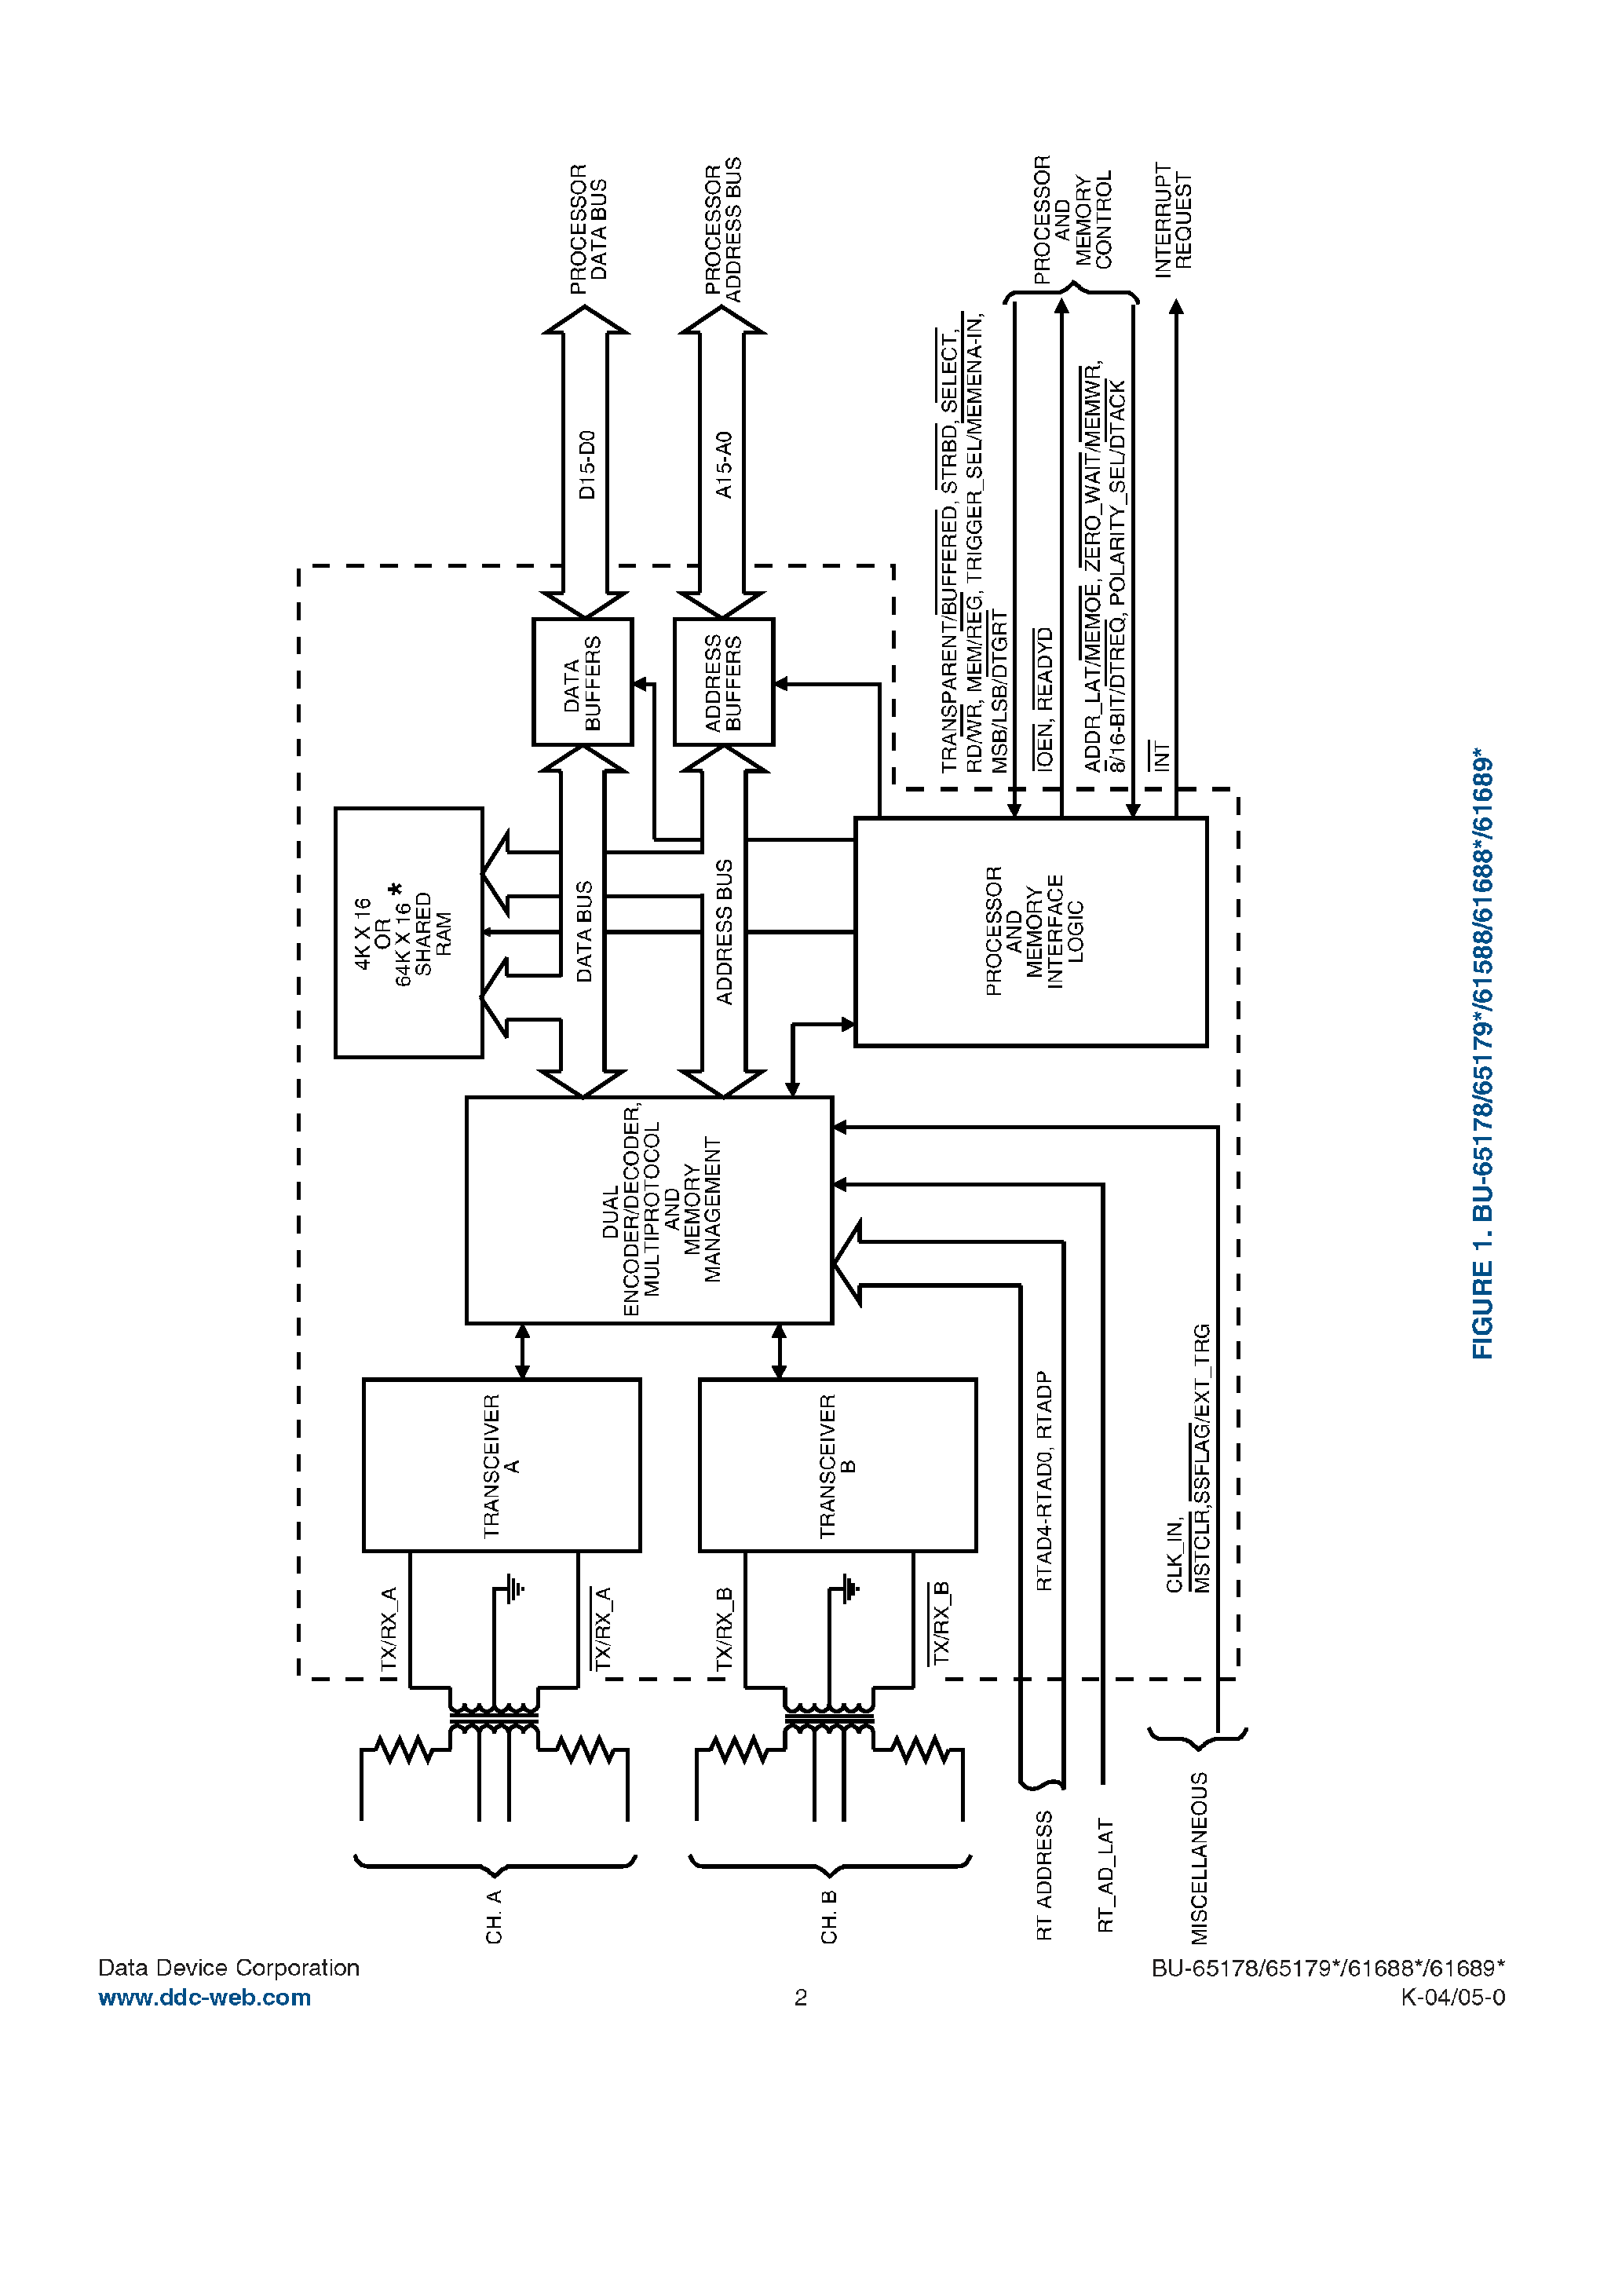 Datasheet BU-61588 - Miniature Advanced Communication Engine and Mini-Ace Plus page 2